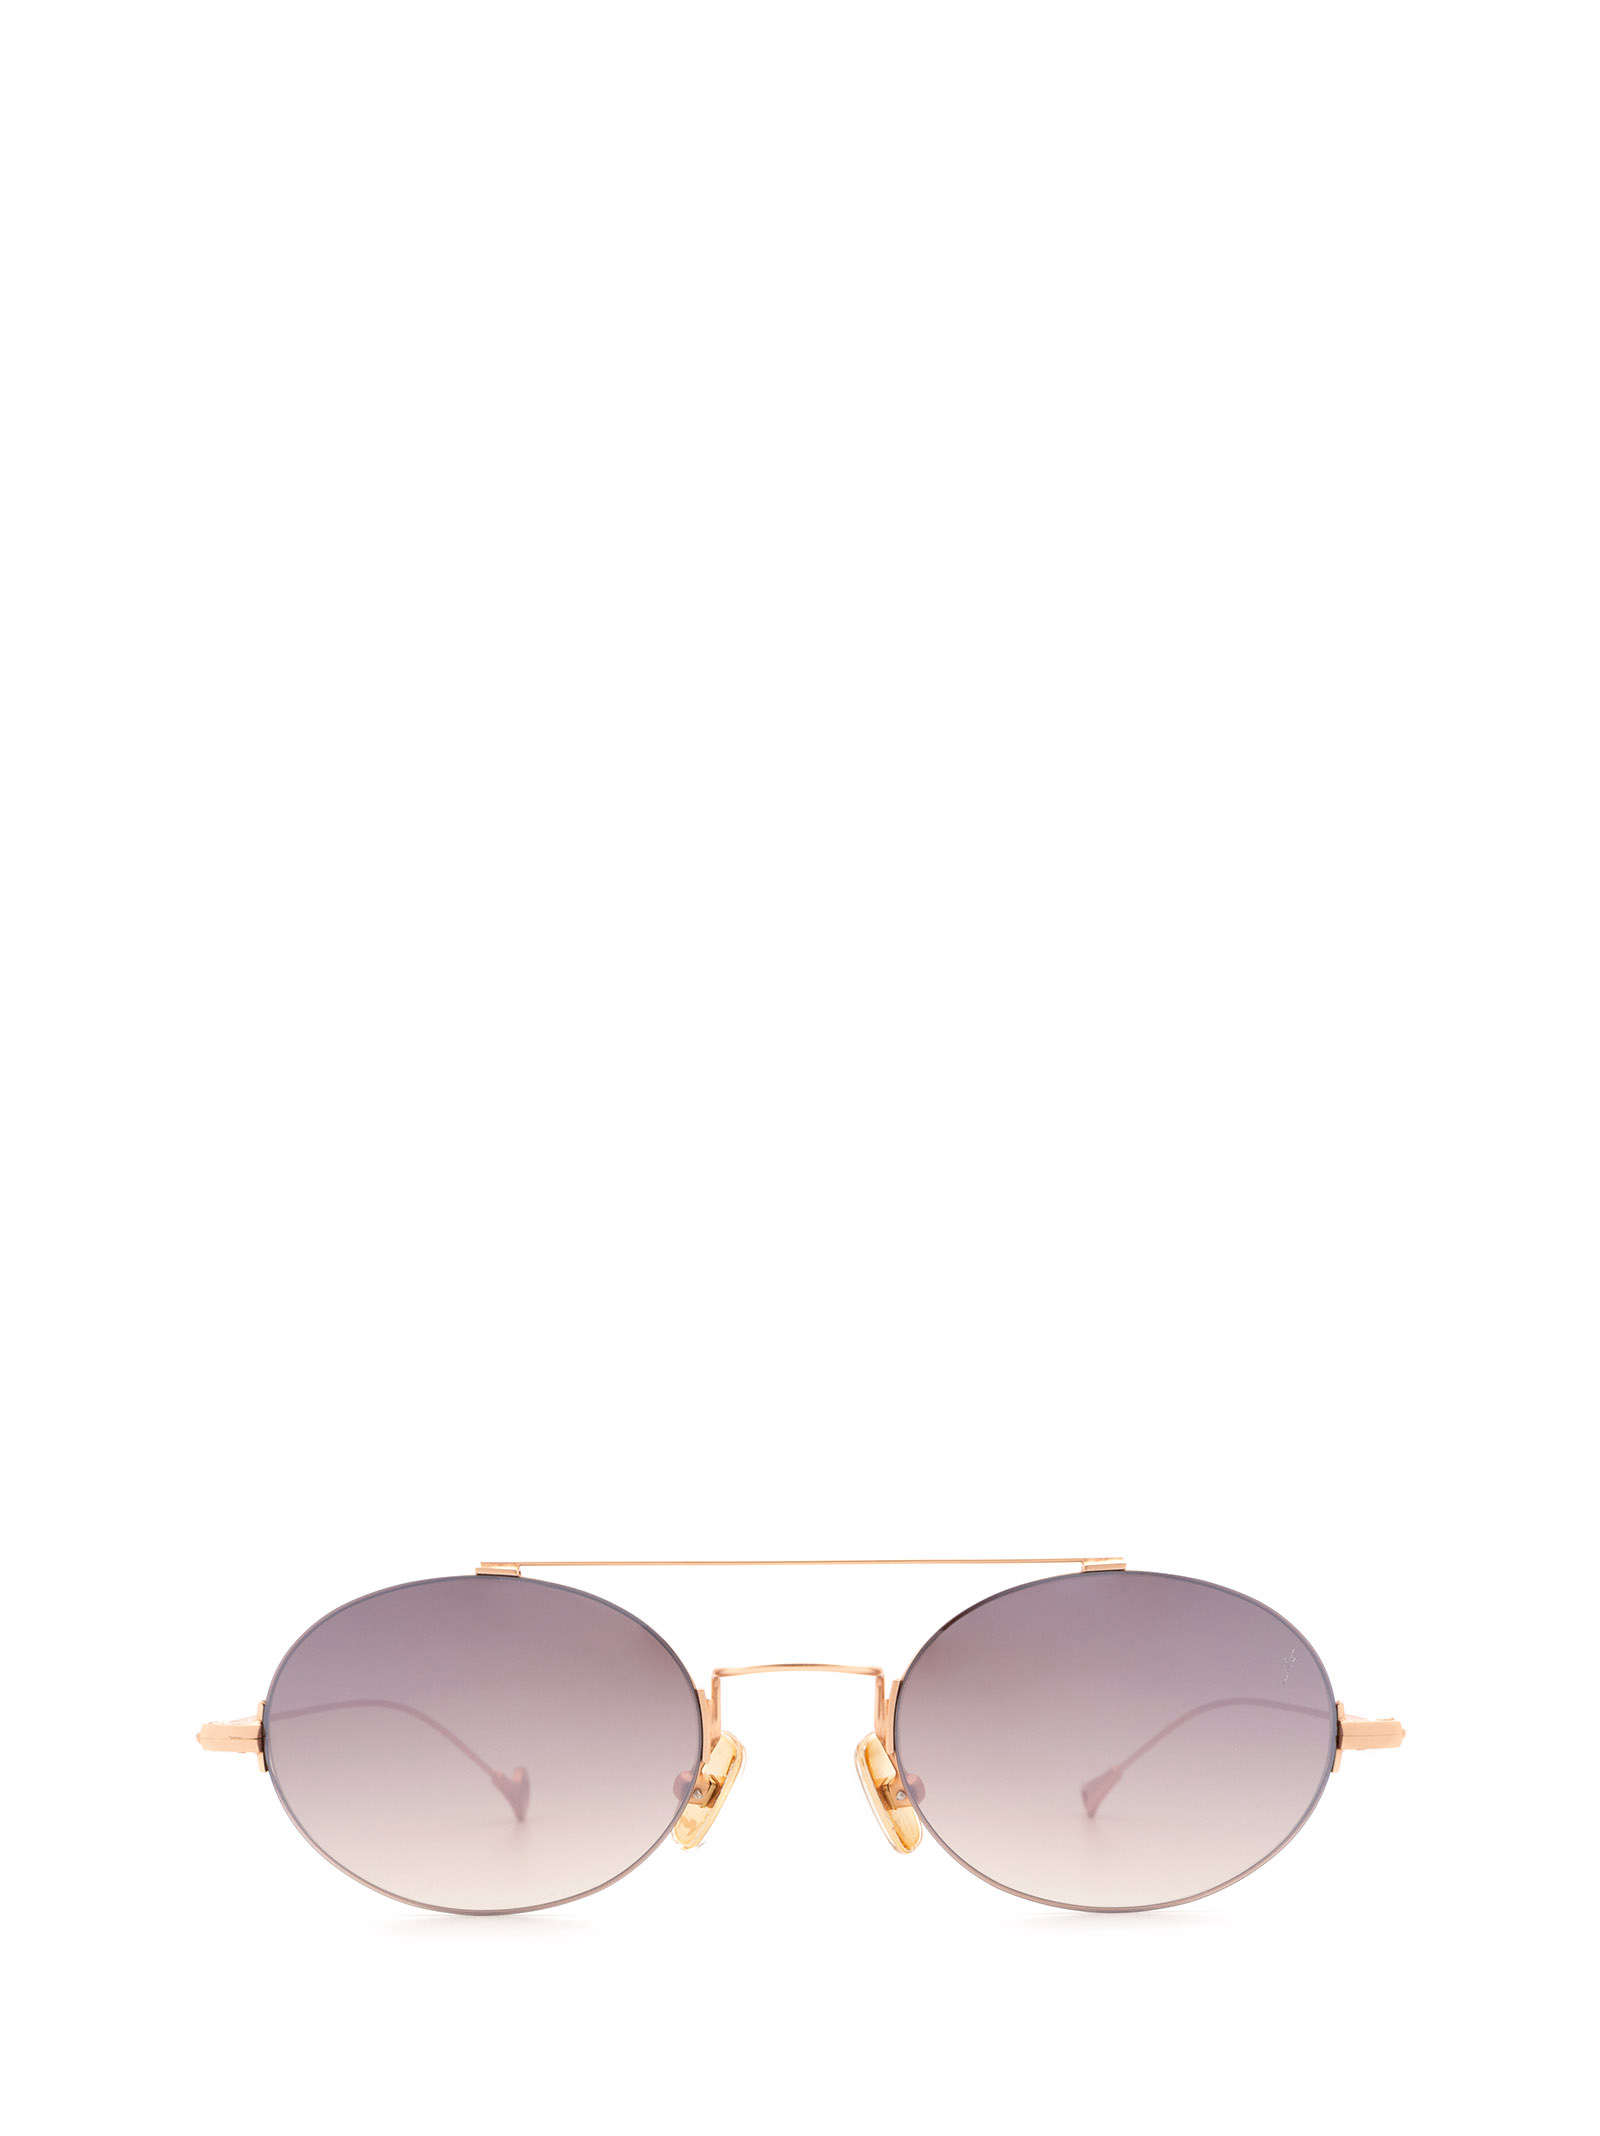 Shop Eyepetizer Celine Rose Gold Matt Sunglasses